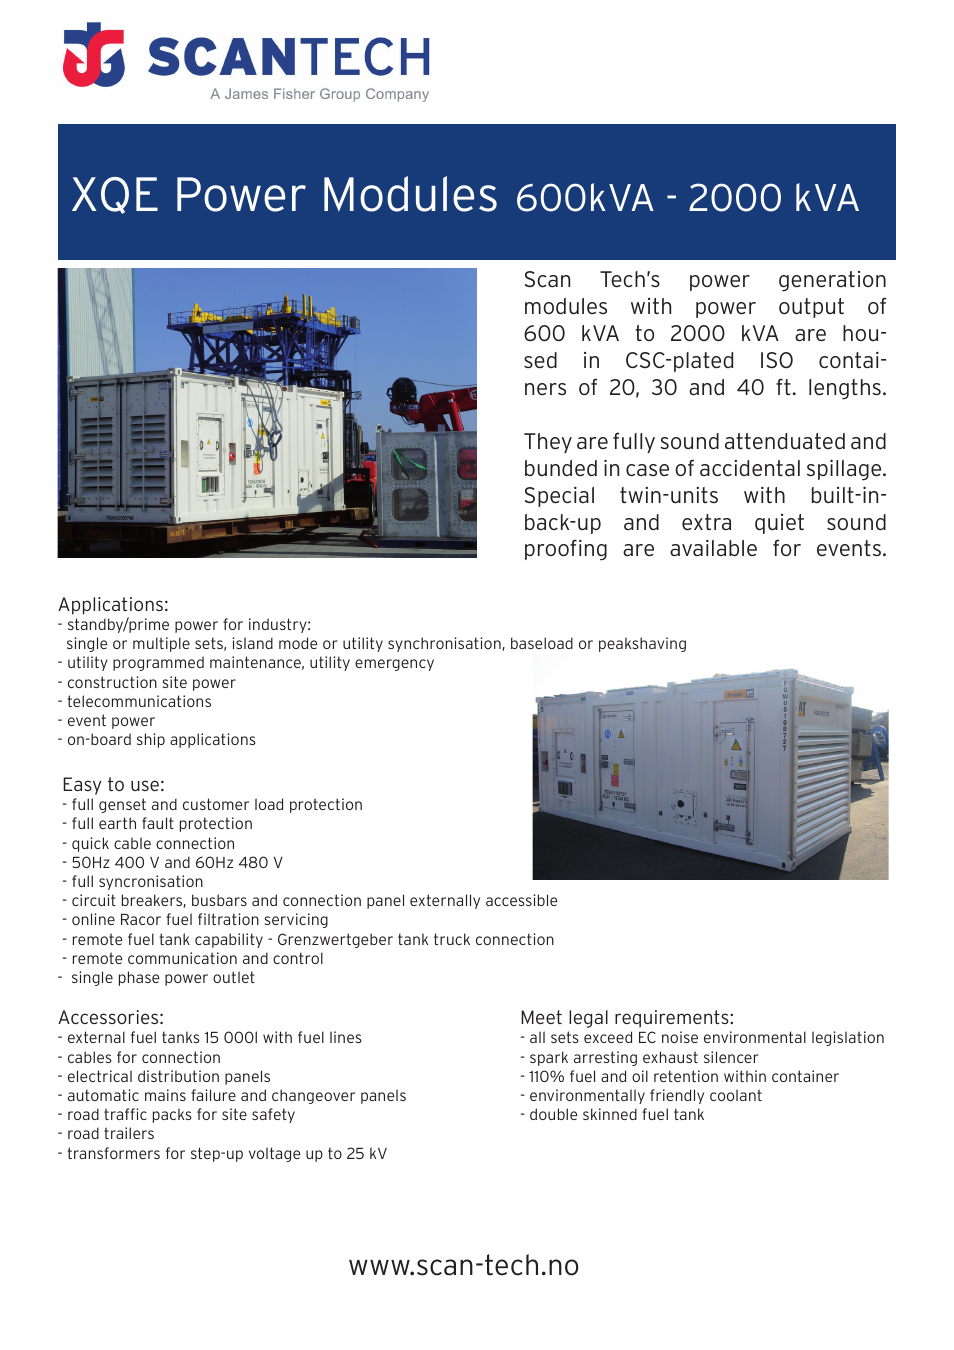 XQE Power Generator